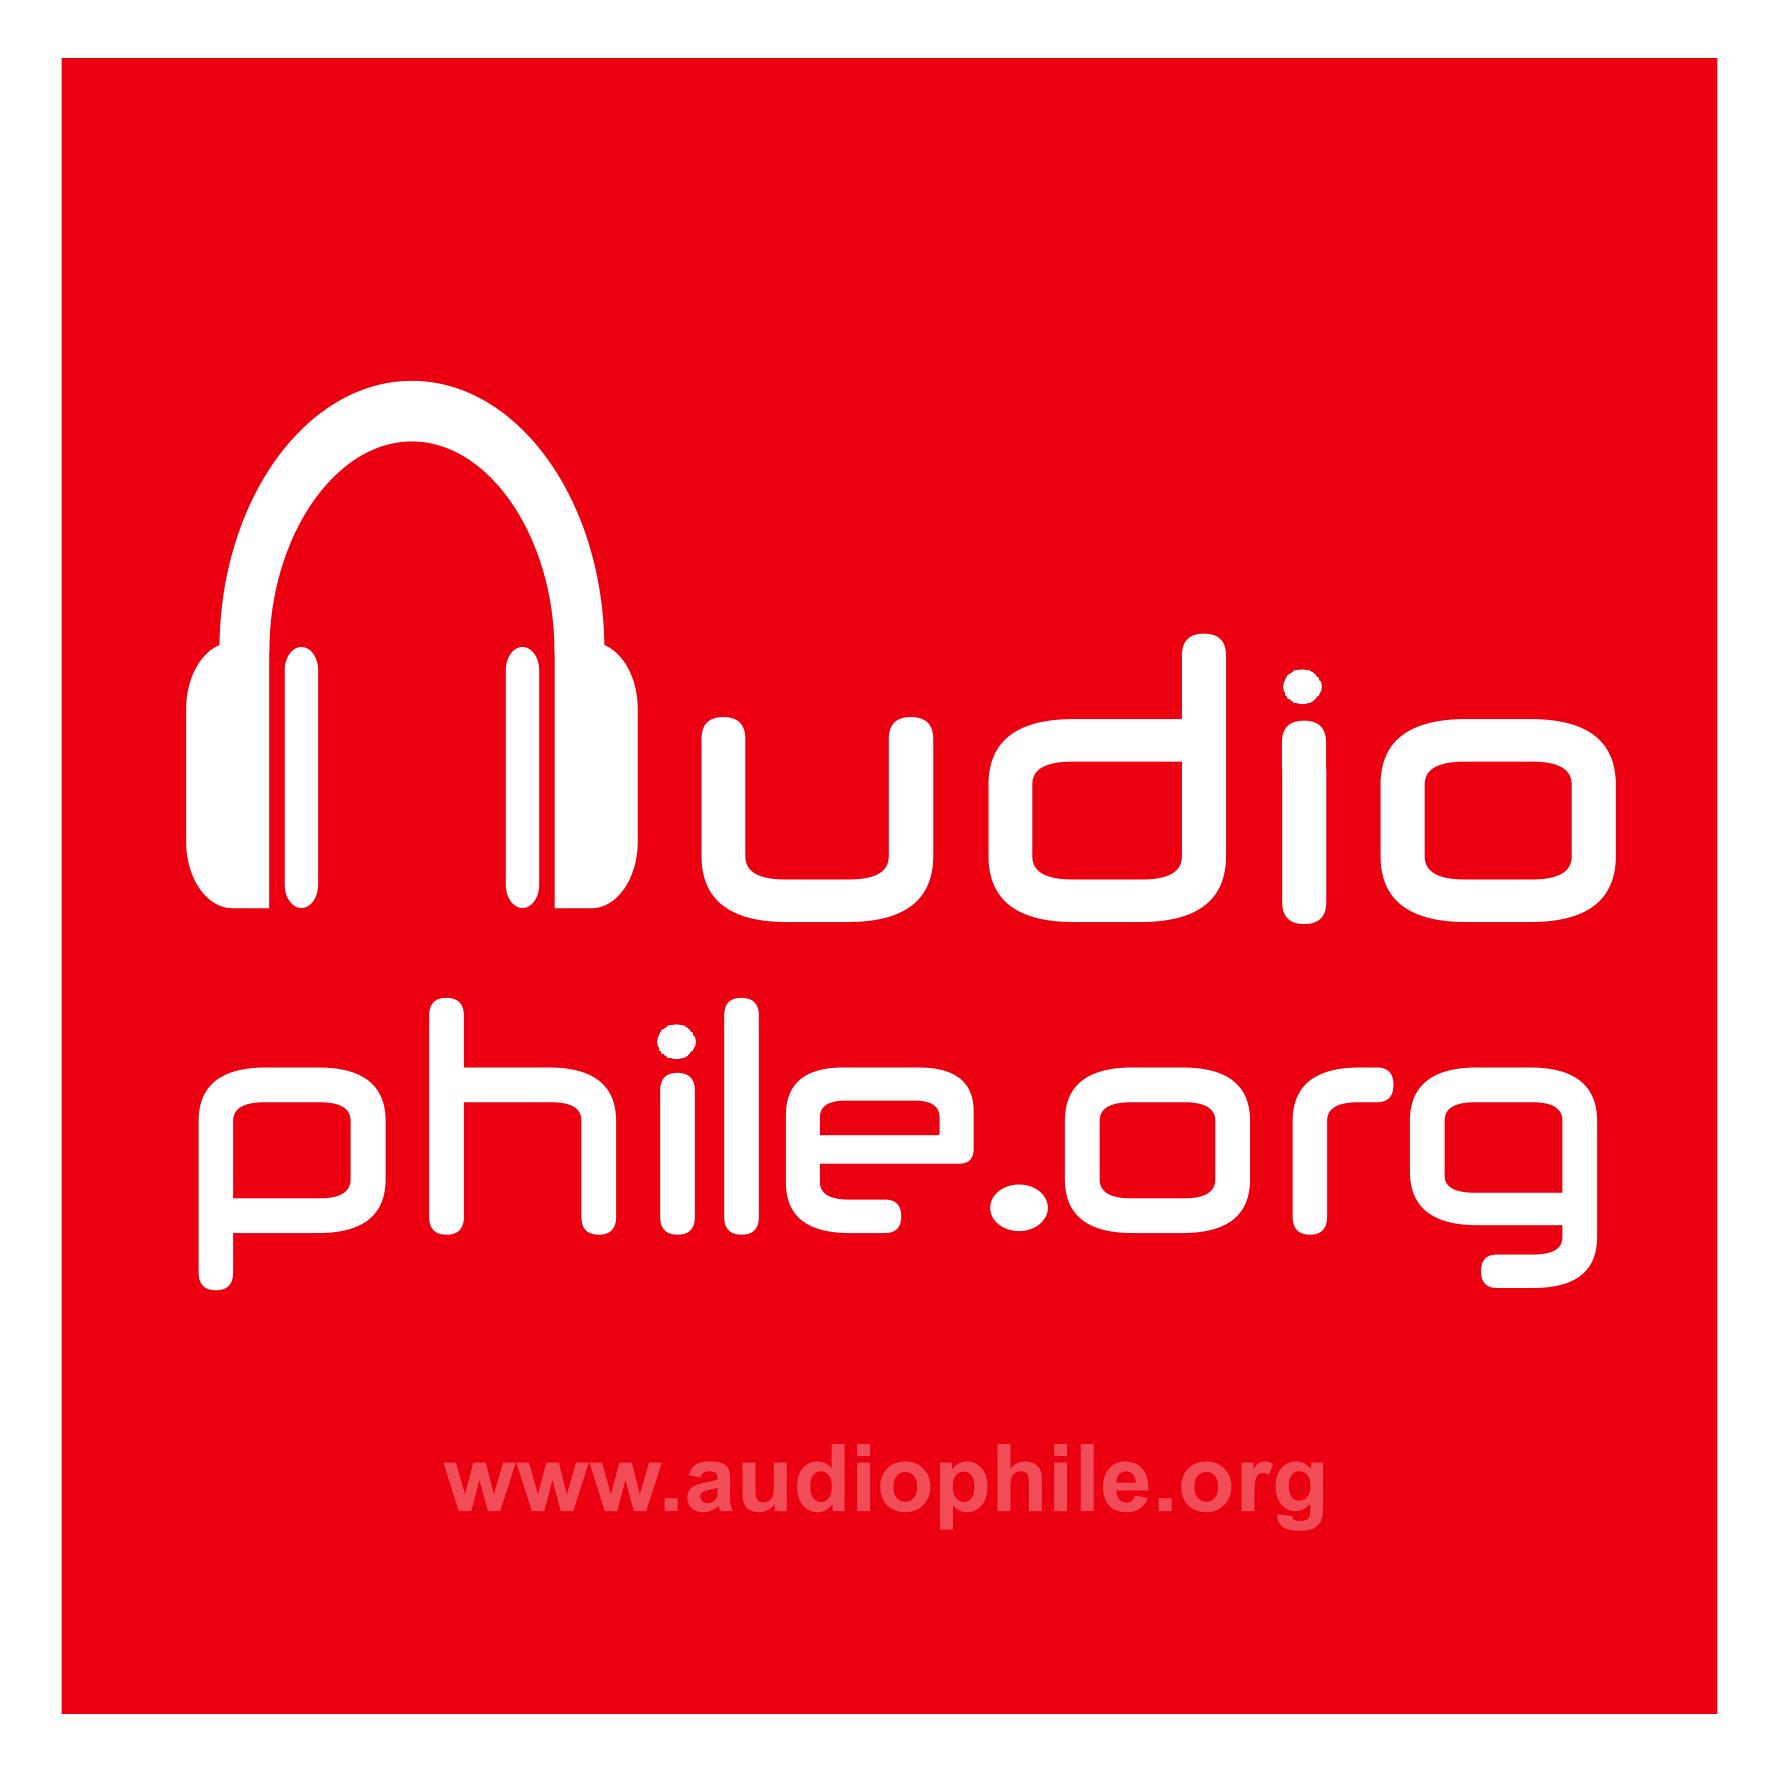 Audiophile.org